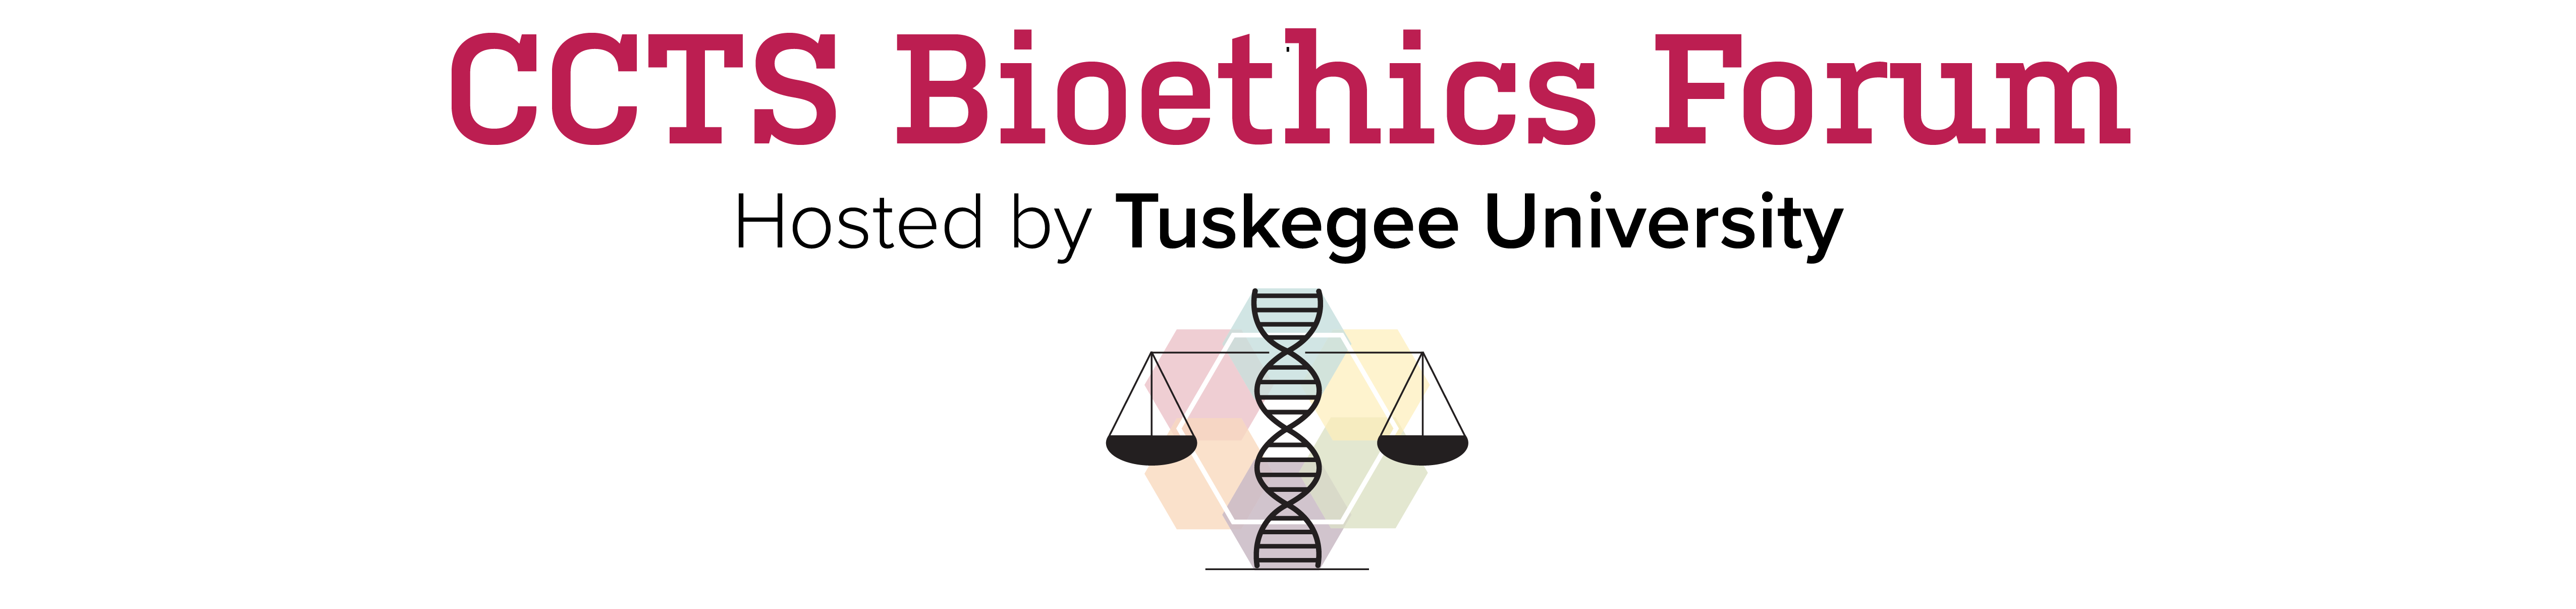 Bioethics forum